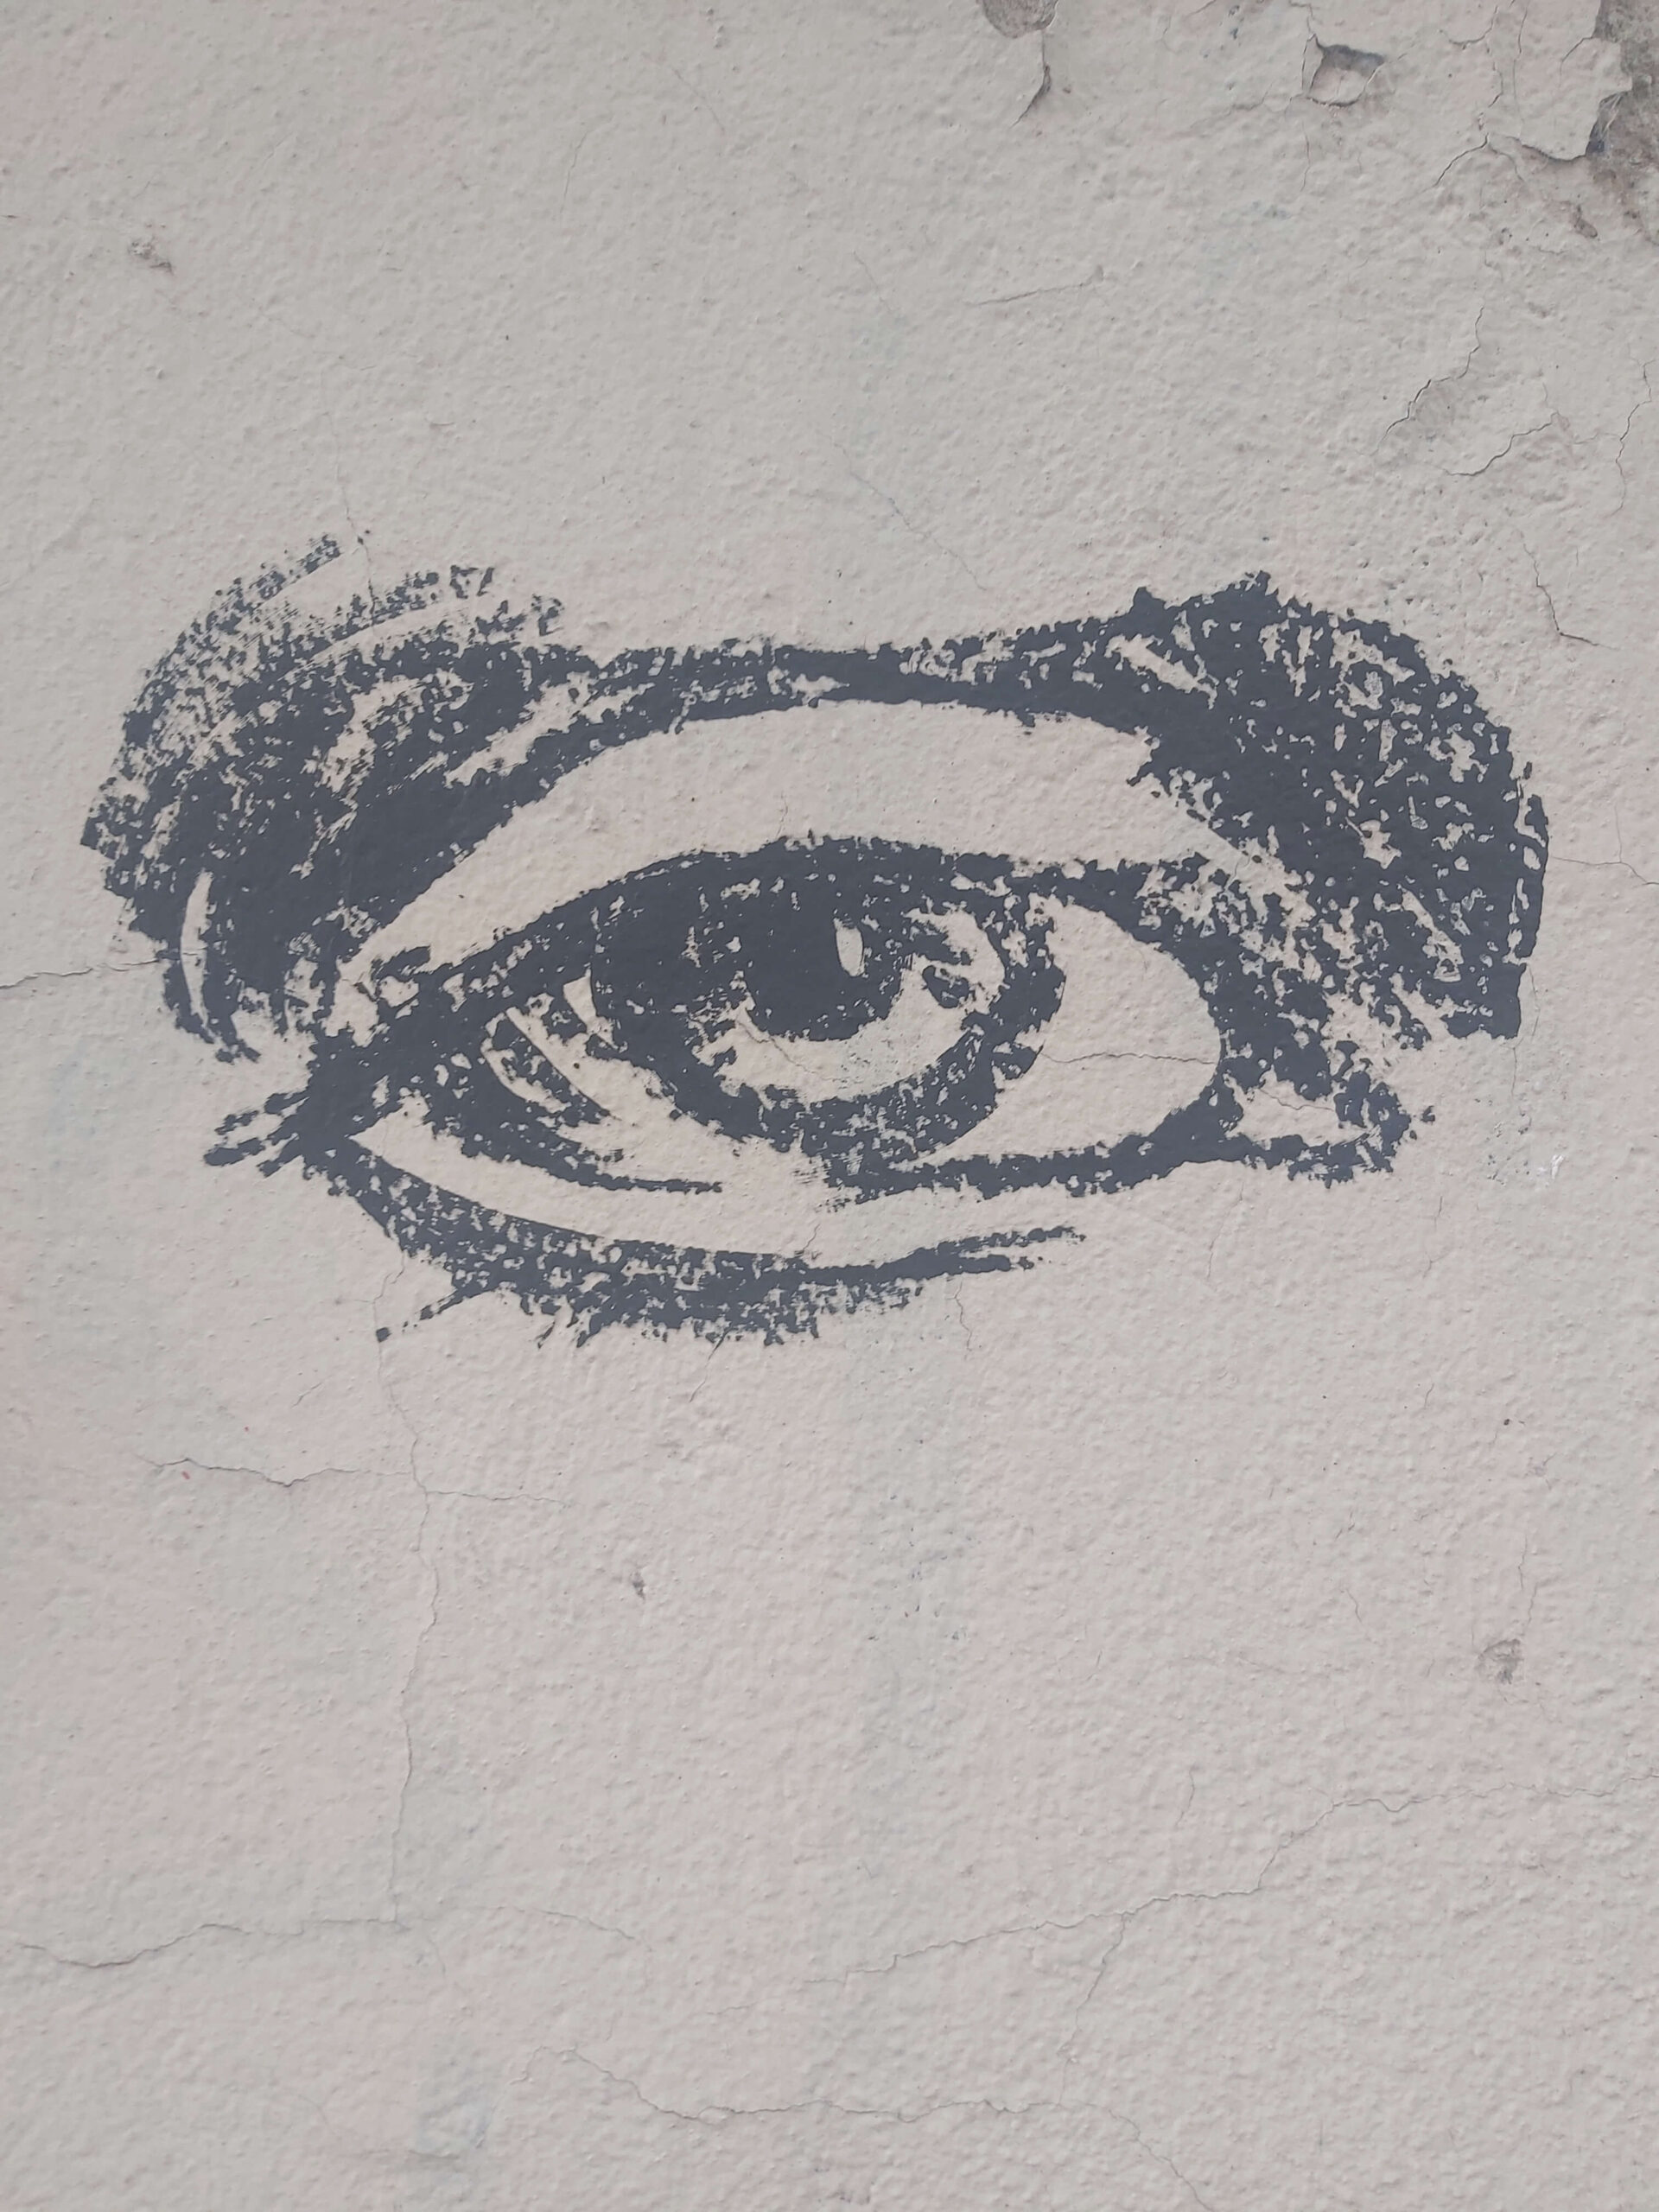 A graffiti image of an eye in Milan, Italy